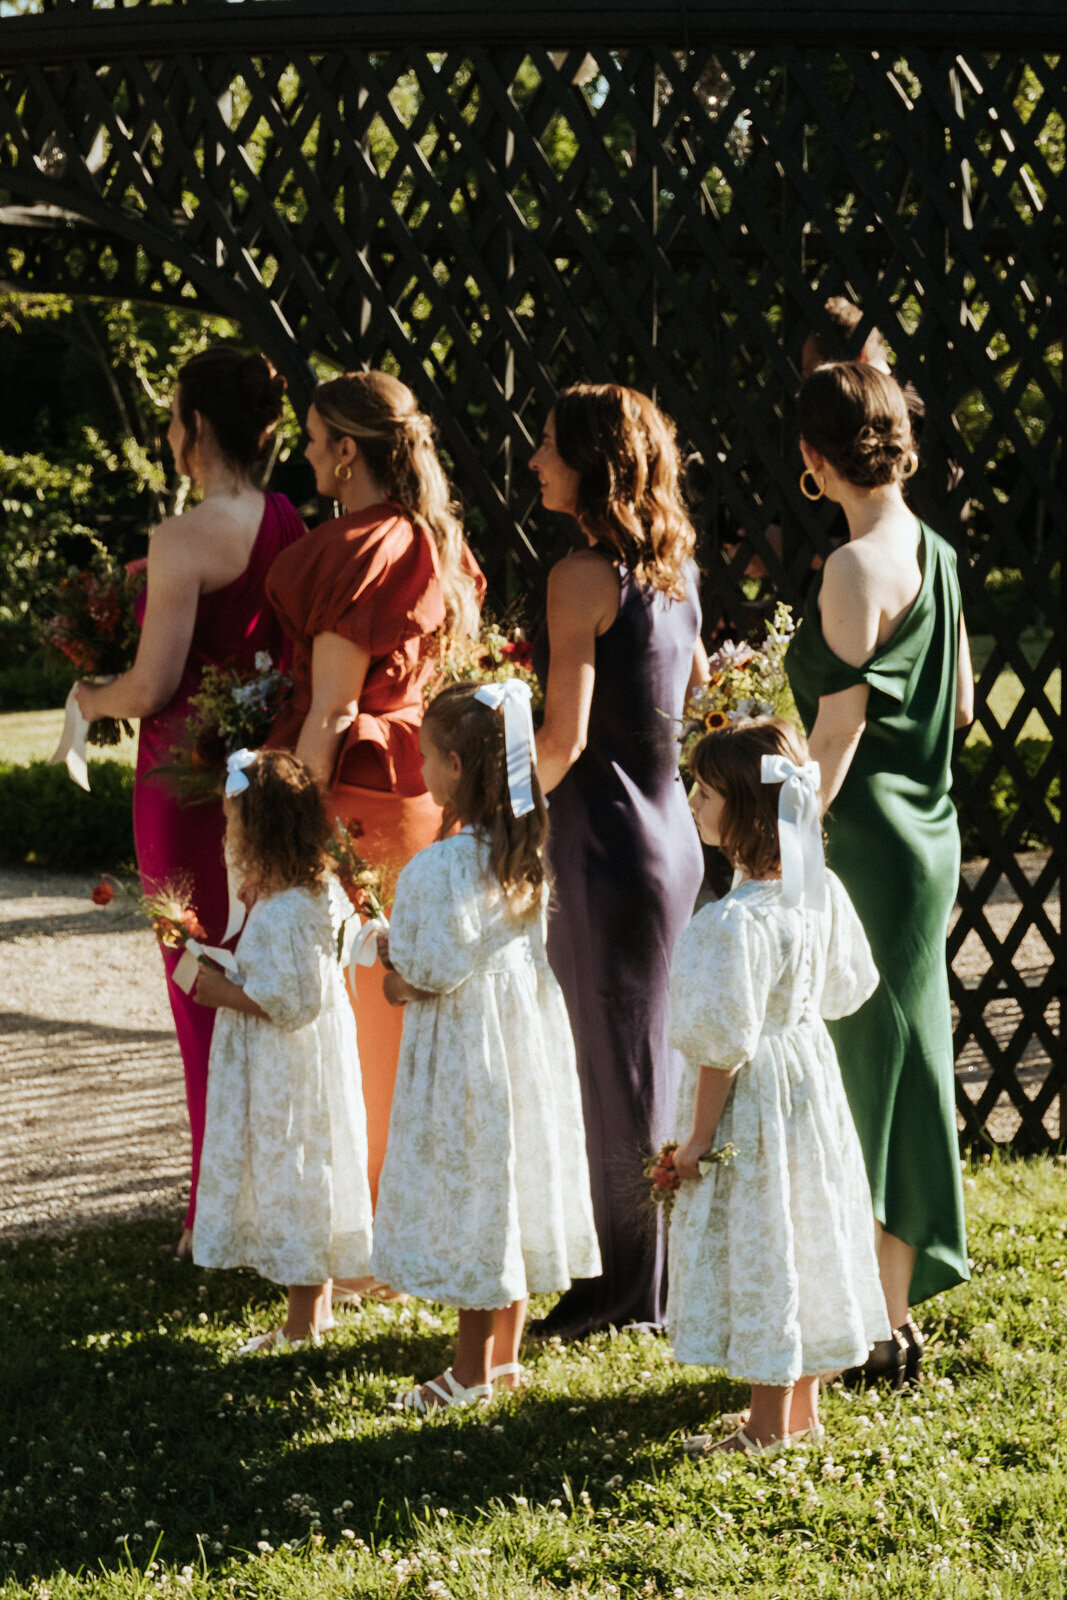 Kate-Murtaugh-Events-bride-groom-wedding-party-fashion